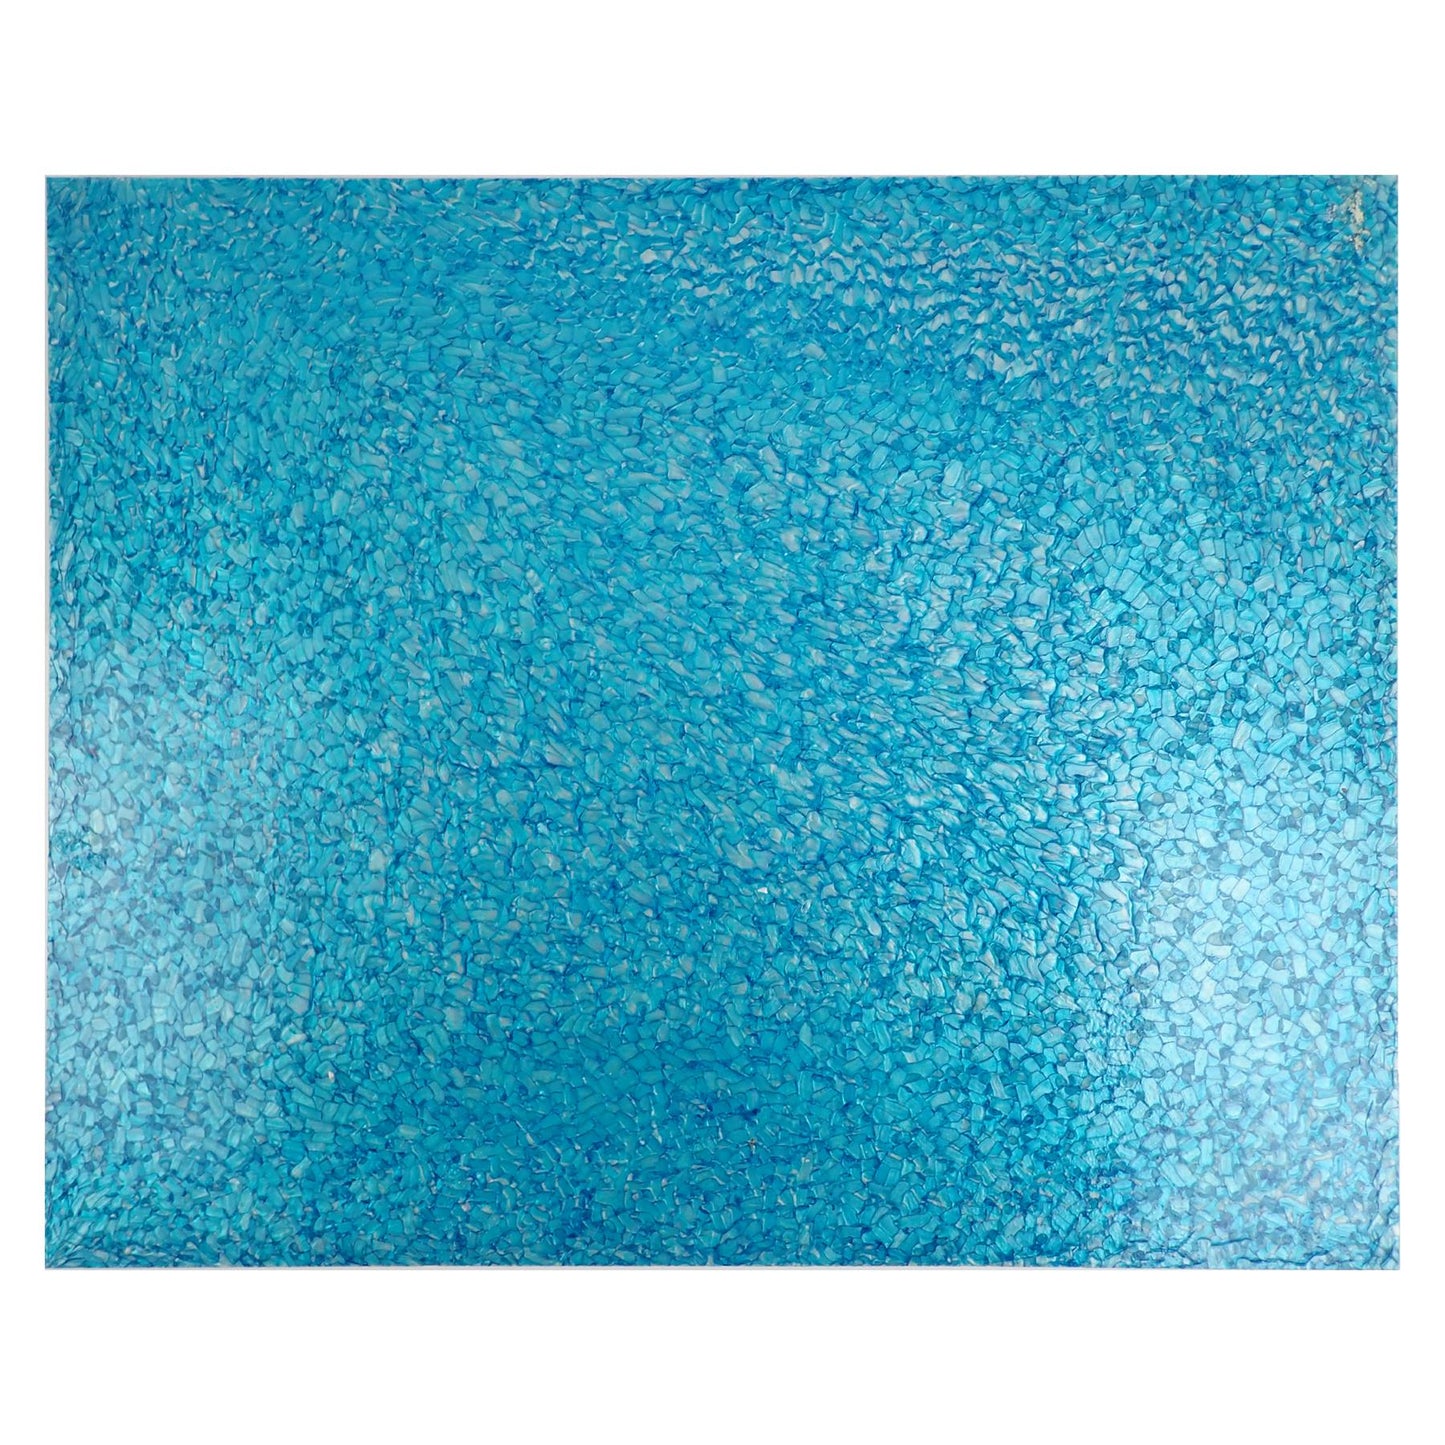 Incudo Cyan Blue Crackle Casein (Galalith) Sheet - 500x400x6mm